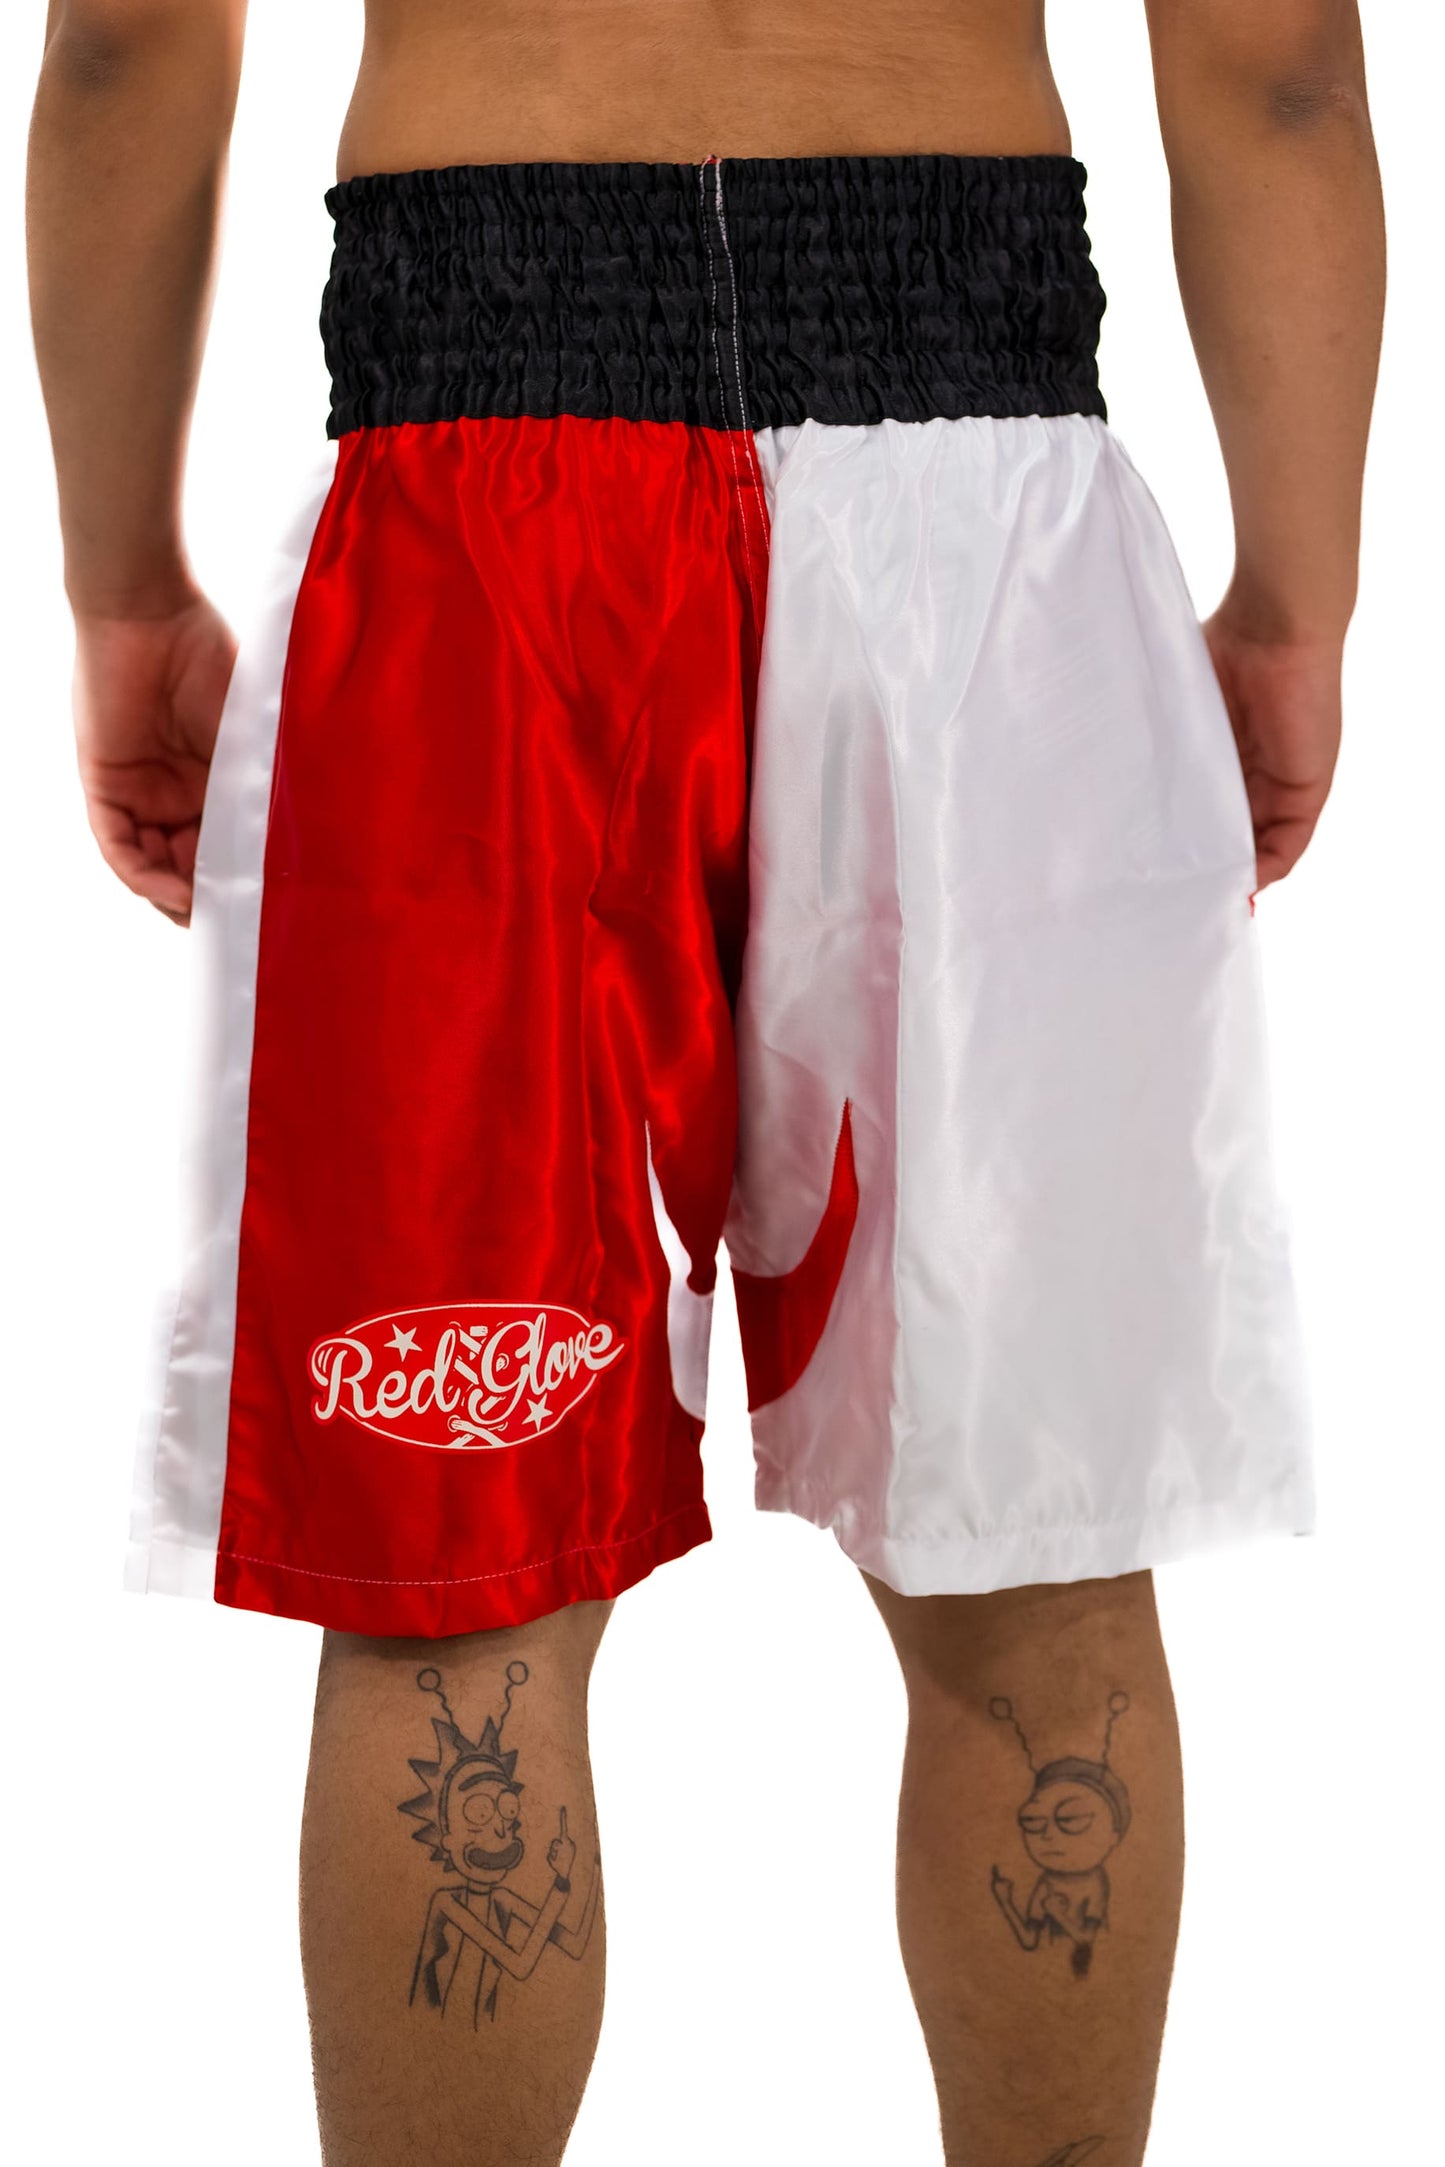 Shorts Redglove Boxing Japan - Redglove